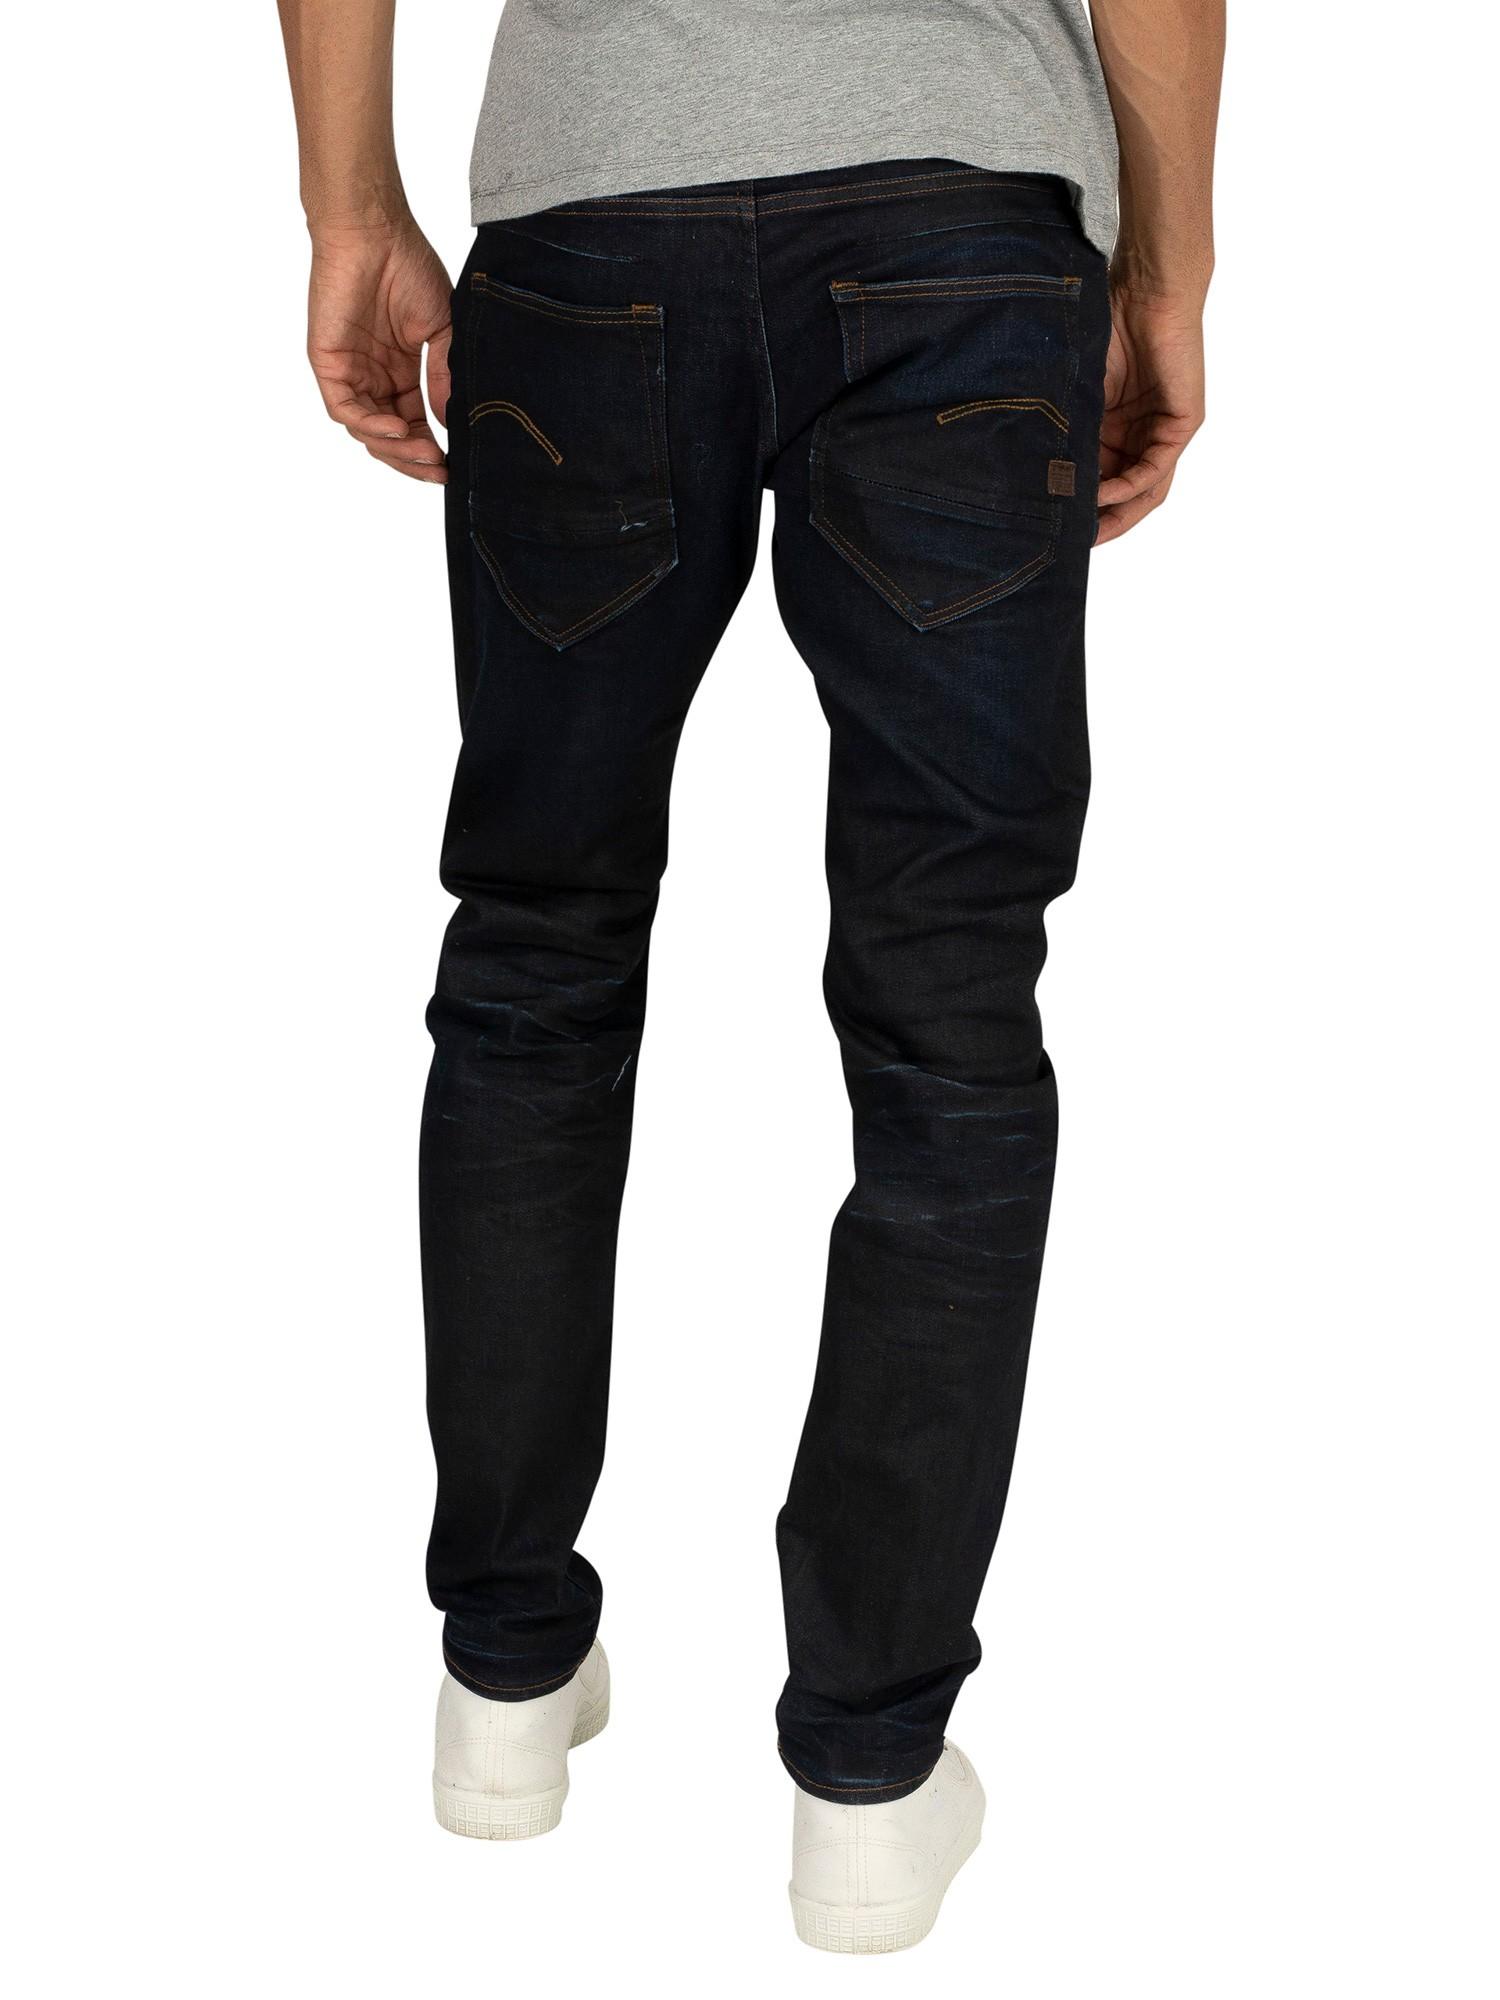 G-Star RAW Denim D-staq 5 Pocket Slim Fit Jeans in Blue for Men - Lyst